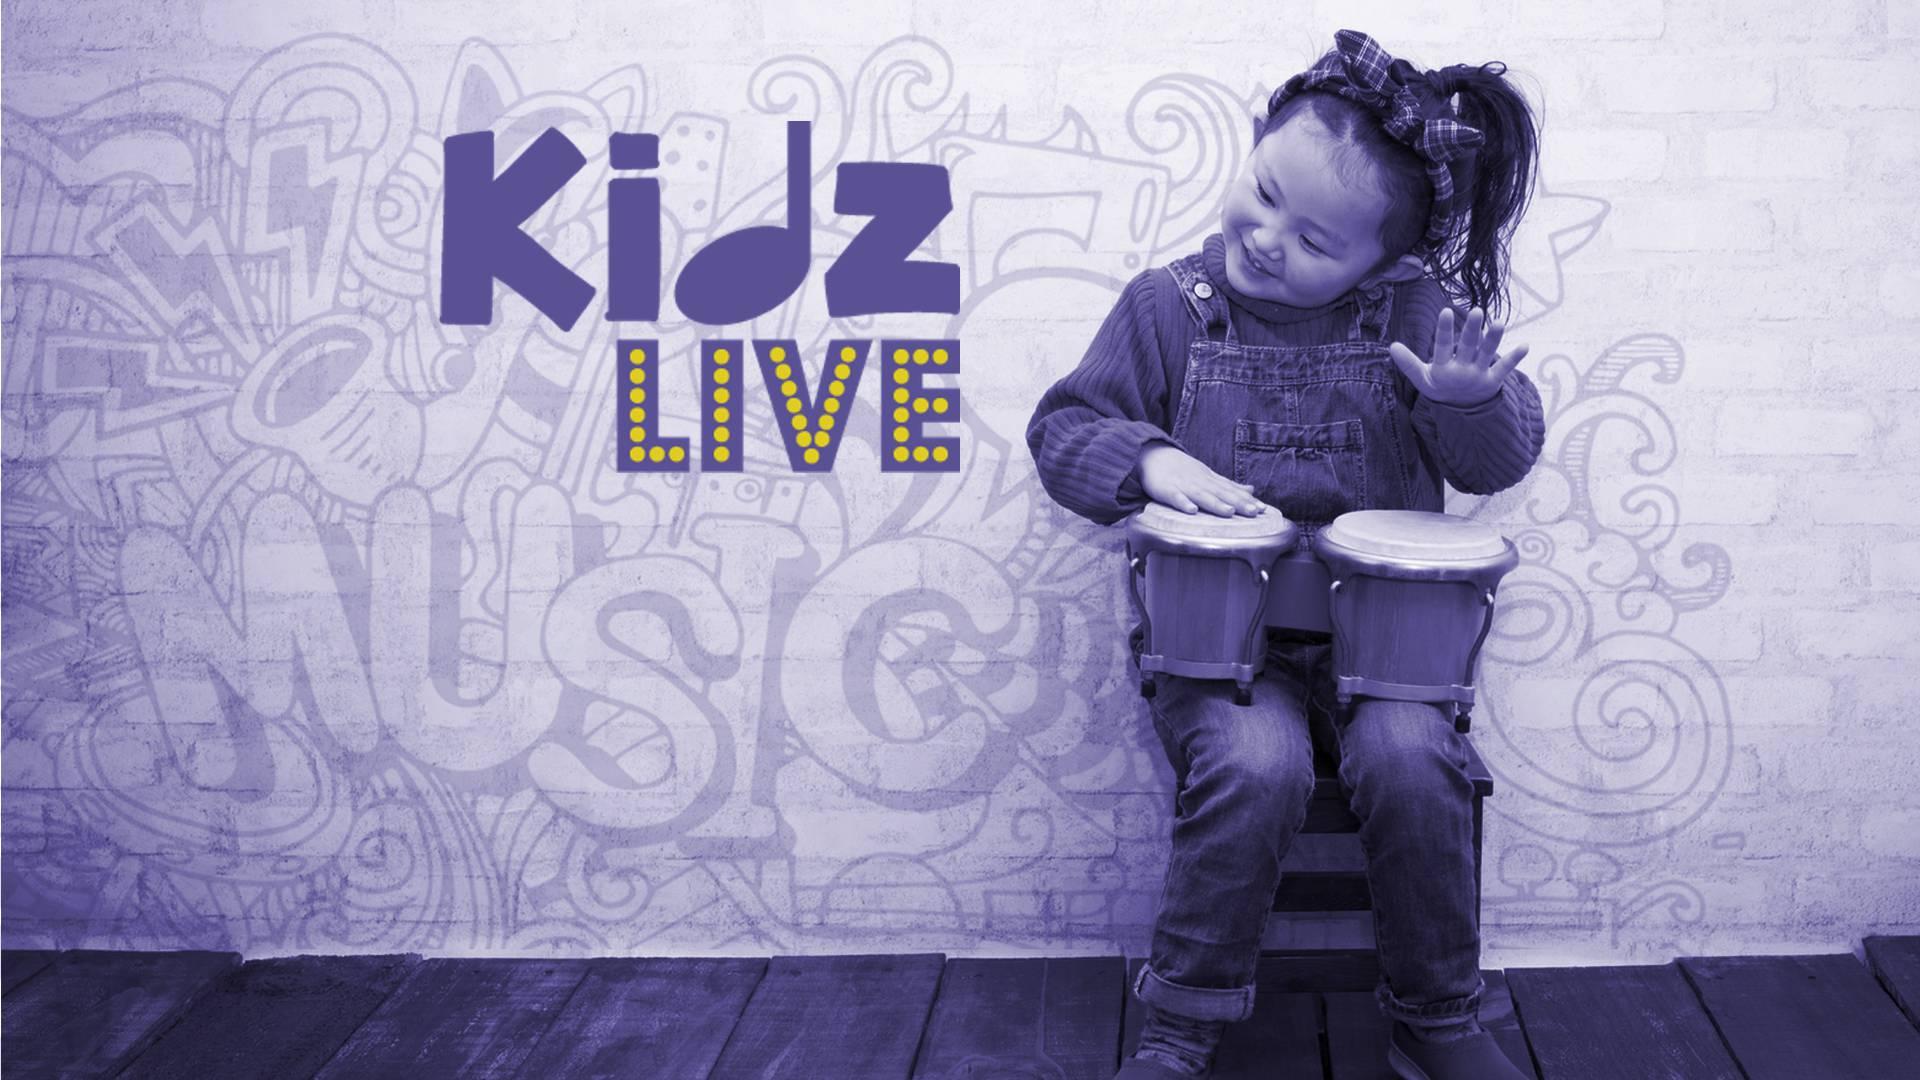 Kidz Live photo